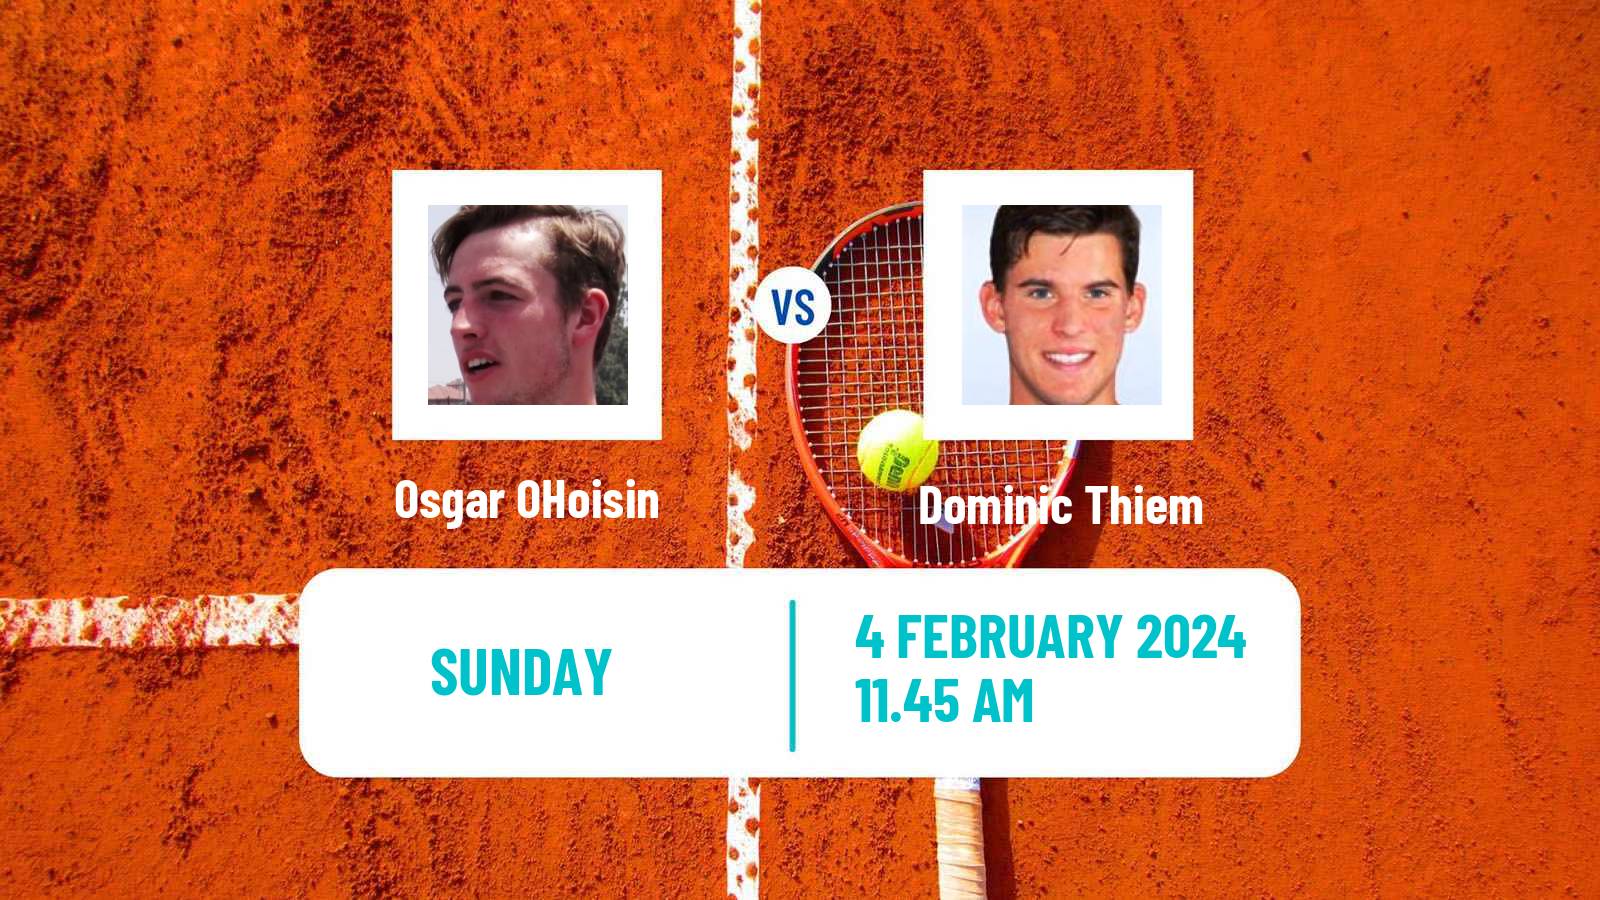 Tennis Davis Cup World Group I Osgar OHoisin - Dominic Thiem